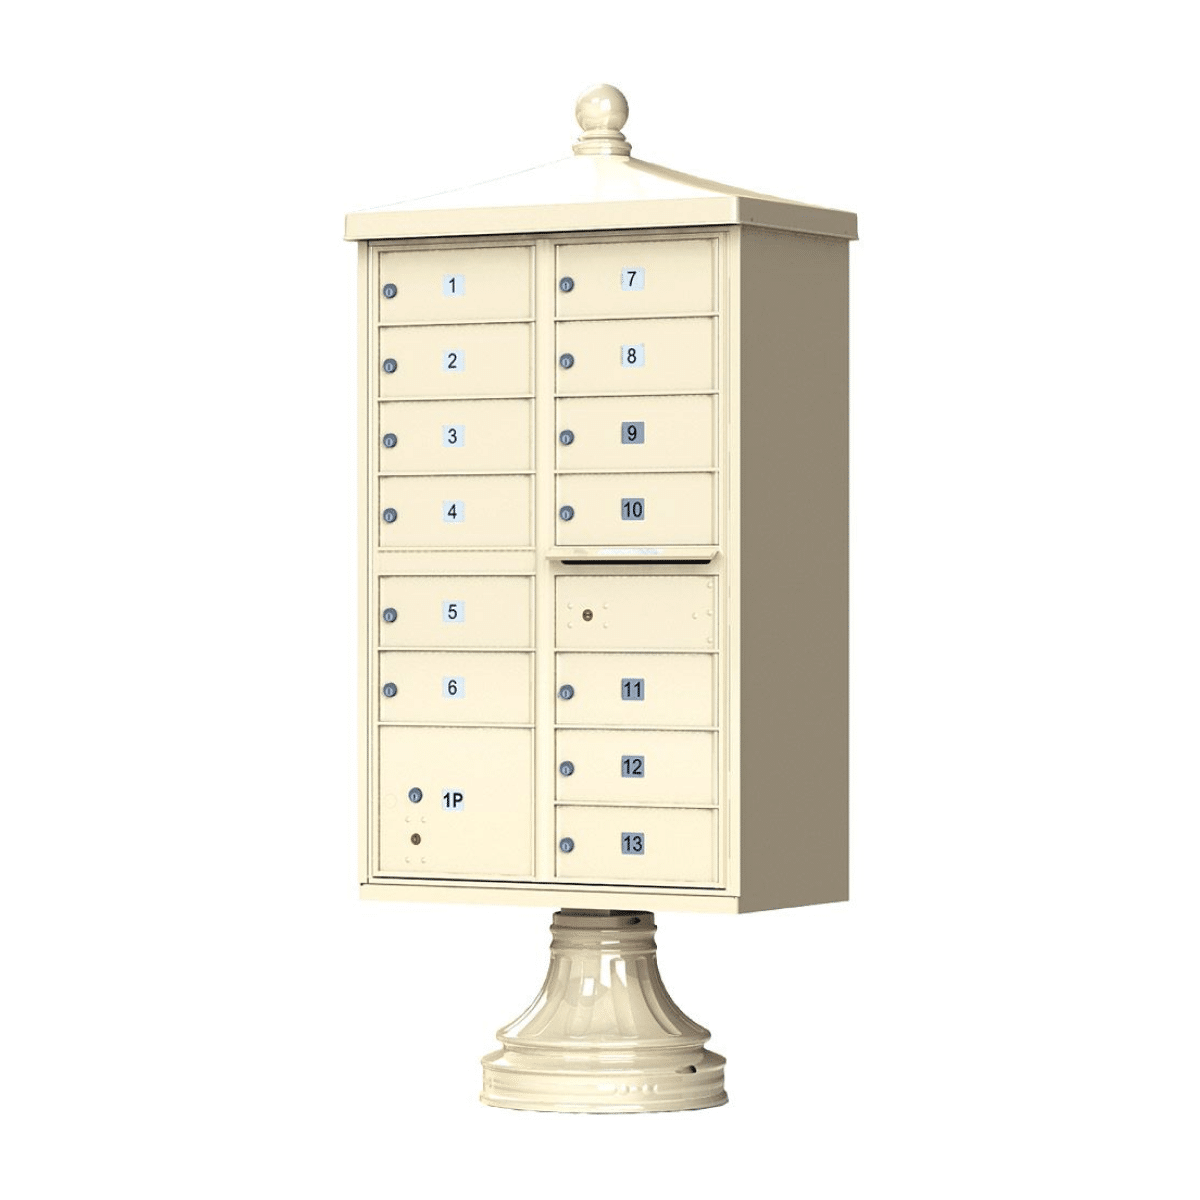 Florence CBU Cluster Mailbox – Vogue Traditional Kit, 13 Tenant Doors, 1 Parcel Locker Product Image